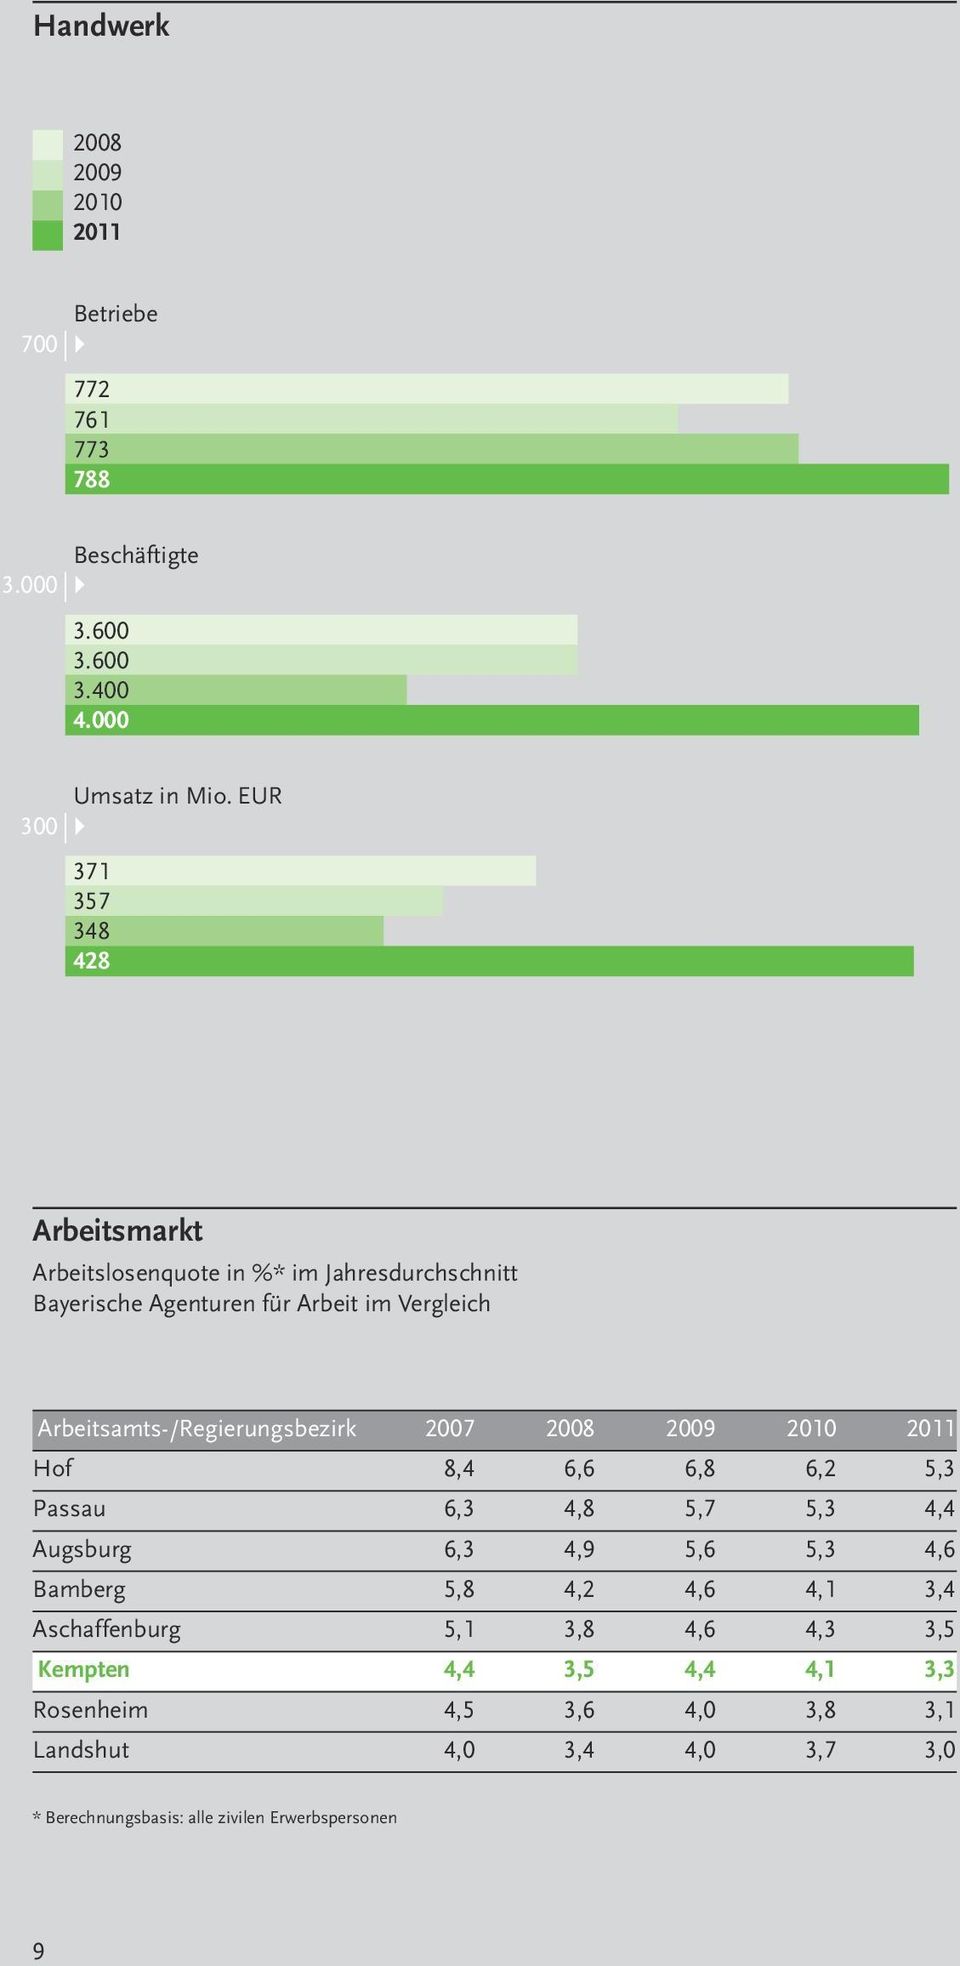 Arbeitsamts-/Regierungsbezirk 2007 2008 2009 2010 2011 Hof 8,4 6,6 6,8 6,2 5,3 Passau 6,3 4,8 5,7 5,3 4,4 Augsburg 6,3 4,9 5,6 5,3 4,6 Bamberg